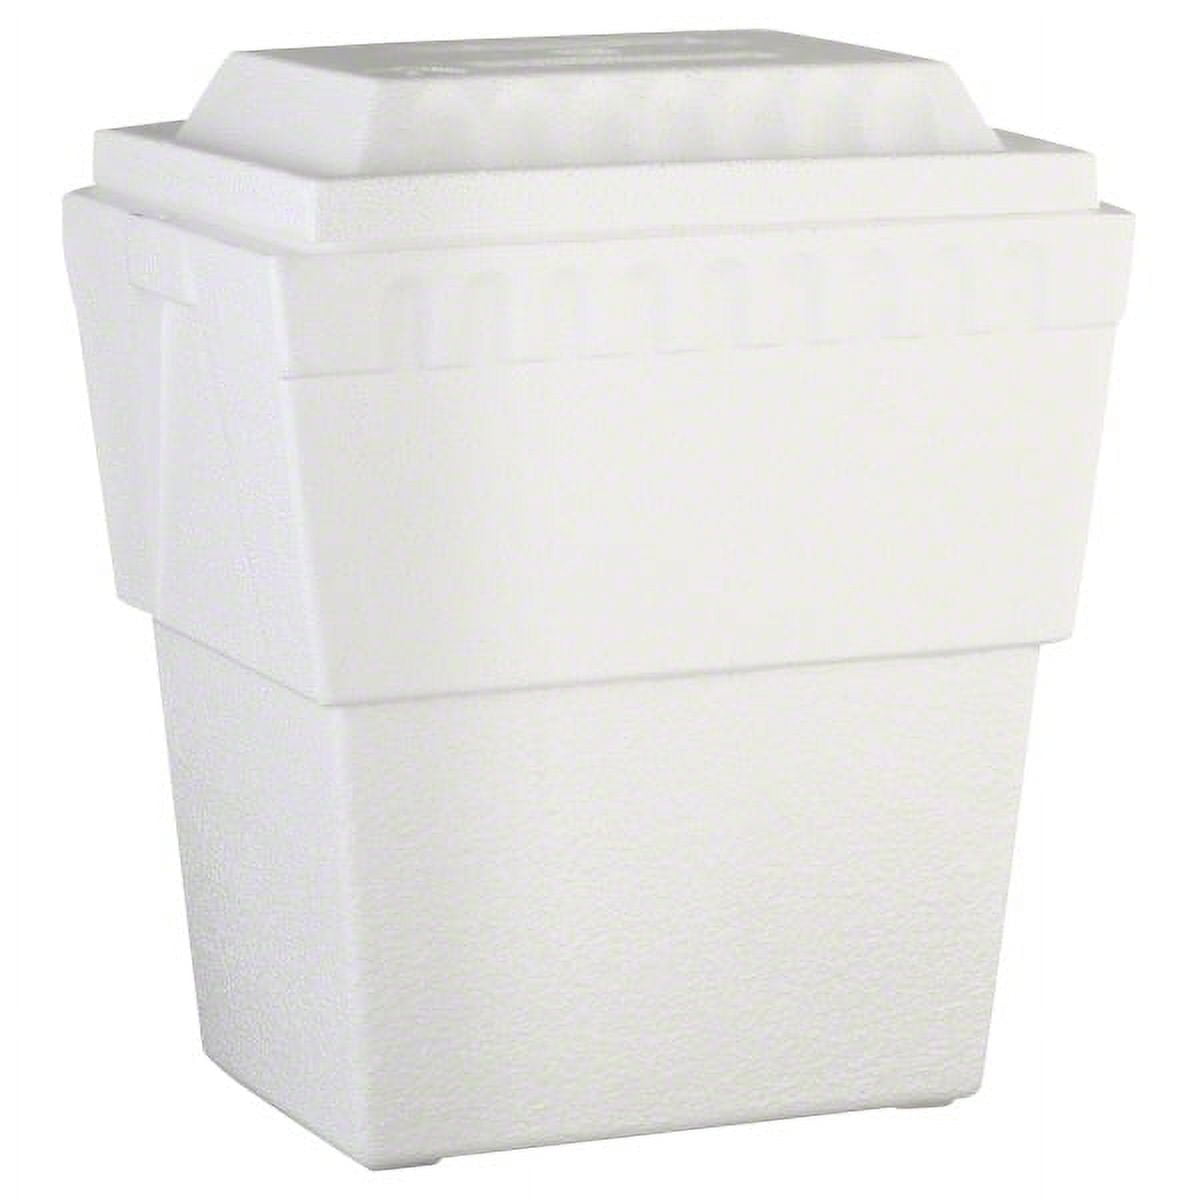 Lifoam White 24 Can Nested Cooler - Detachable Lid, Hard